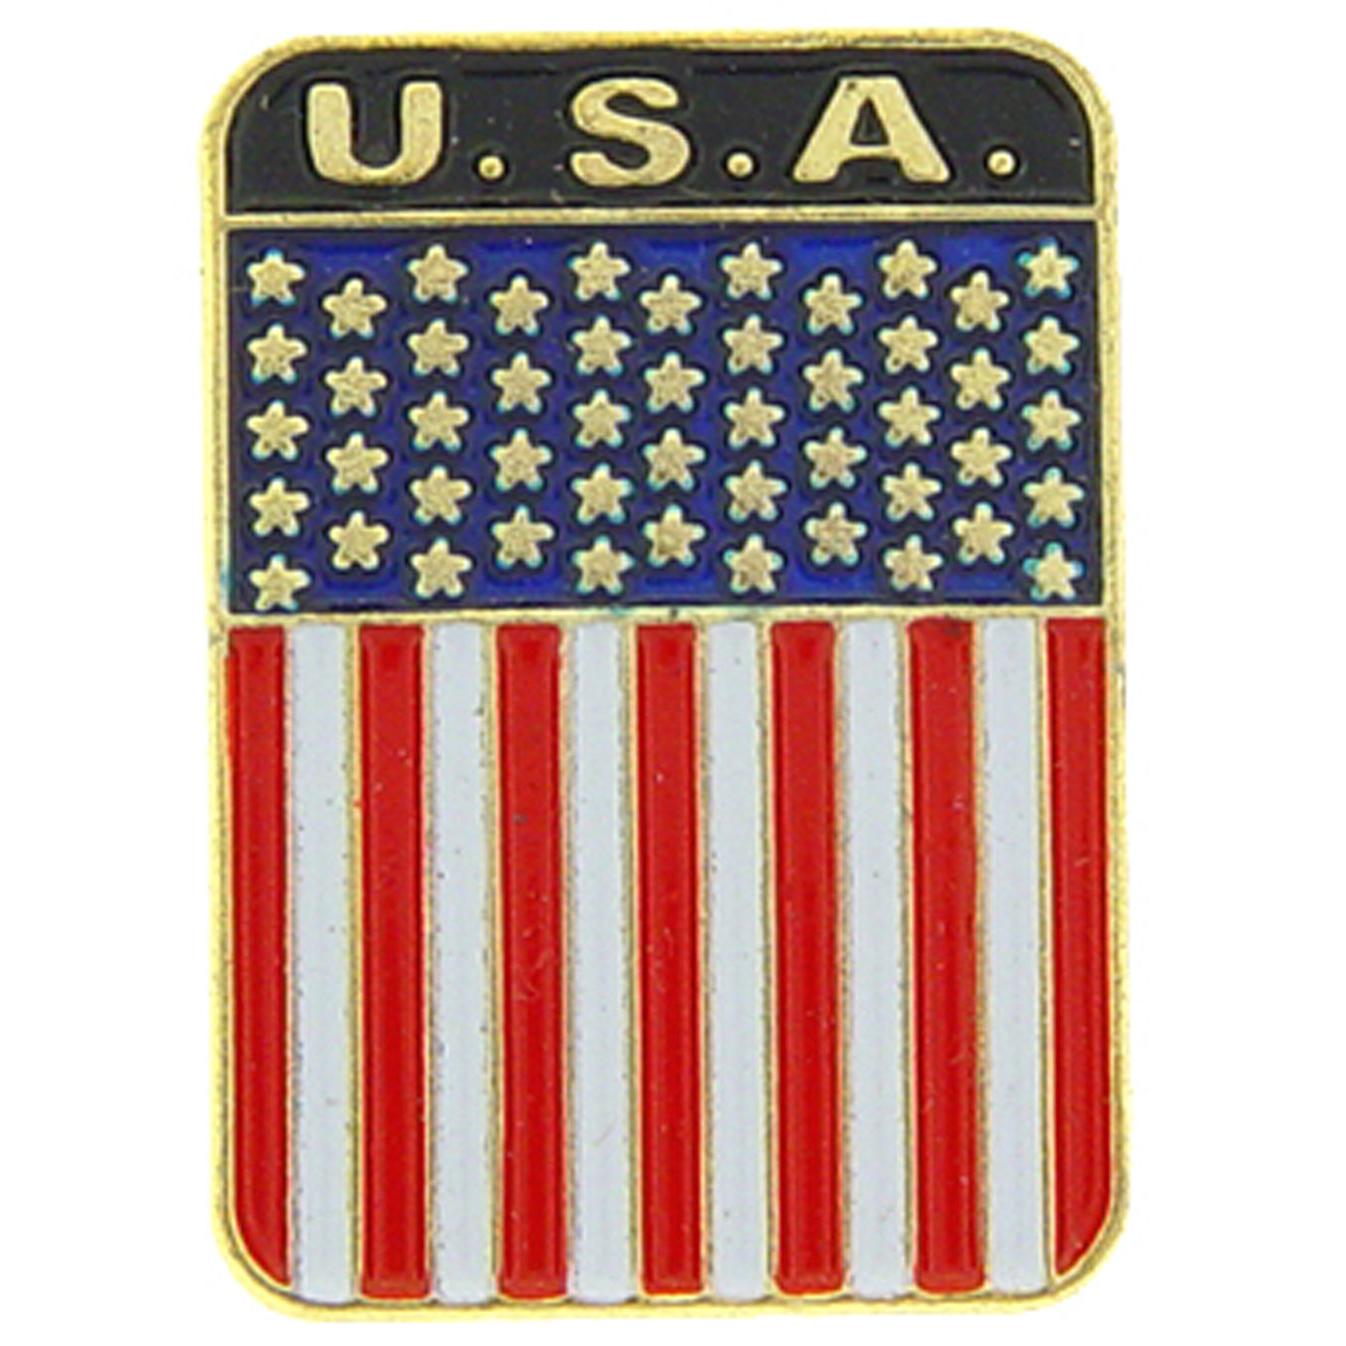 American Flag Pin 1